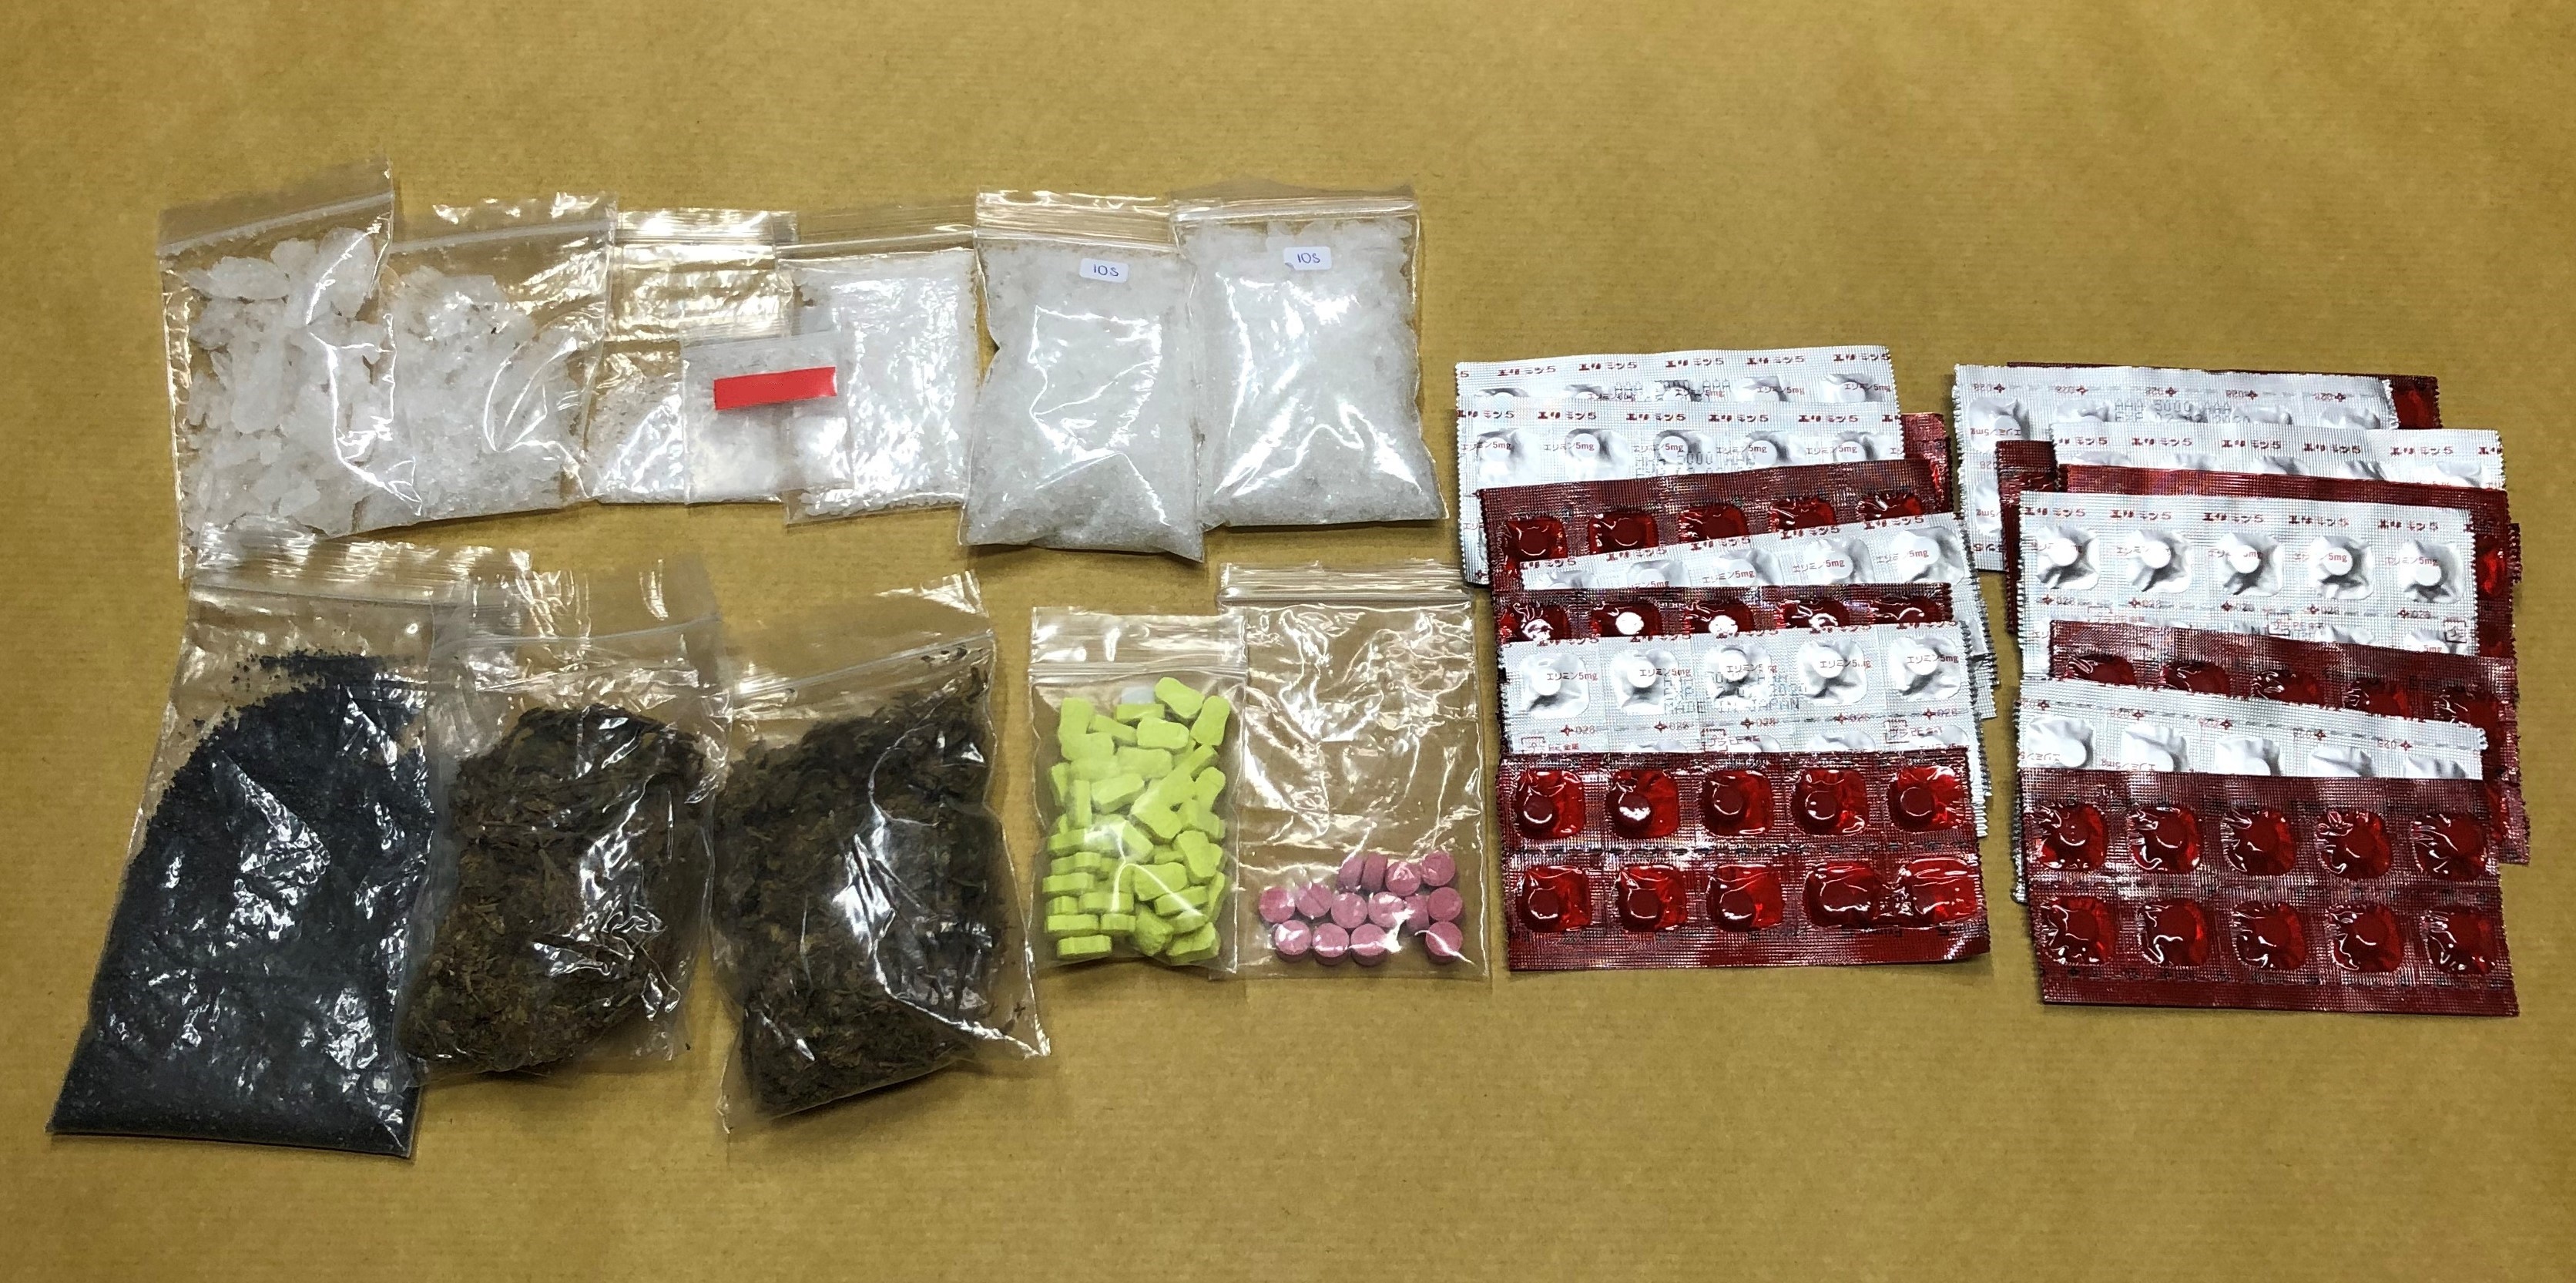 Drugs seized at Jalan Loyang Besar on 21 Mar 2019